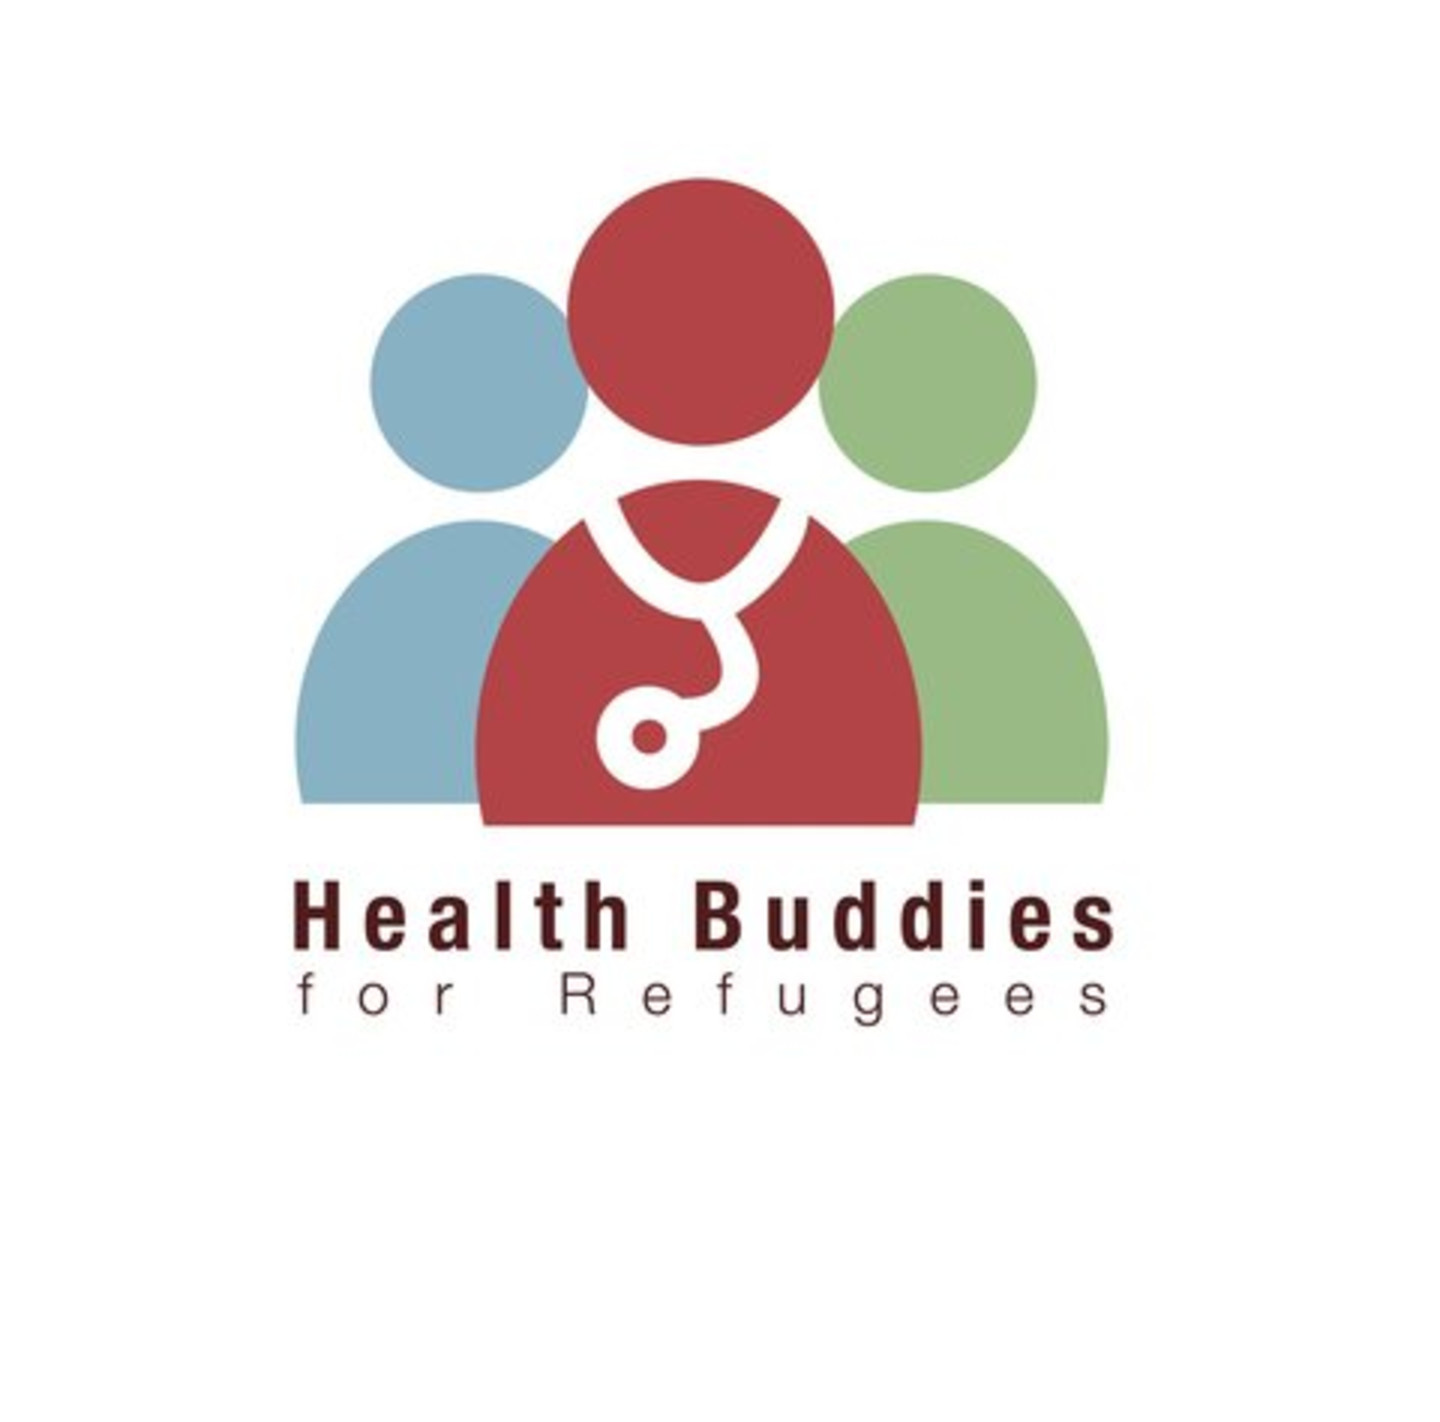 Health Buddies 